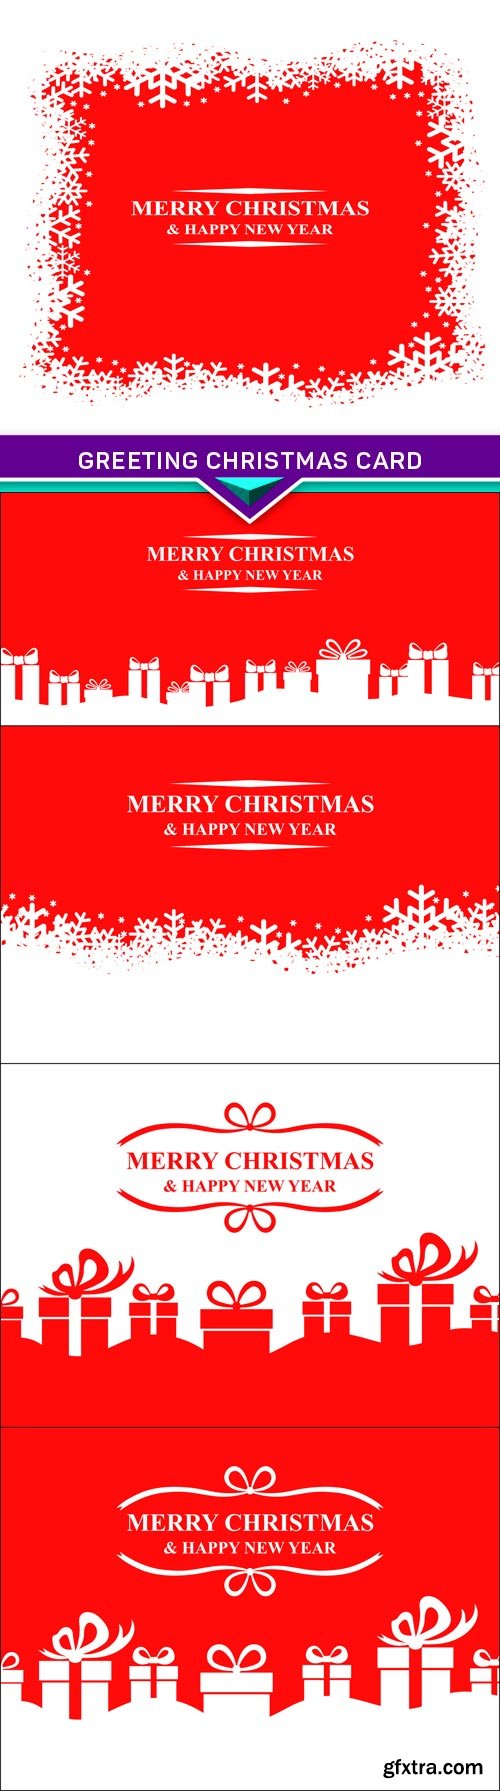 Greeting Christmas card with snowflakes border 5X EPS